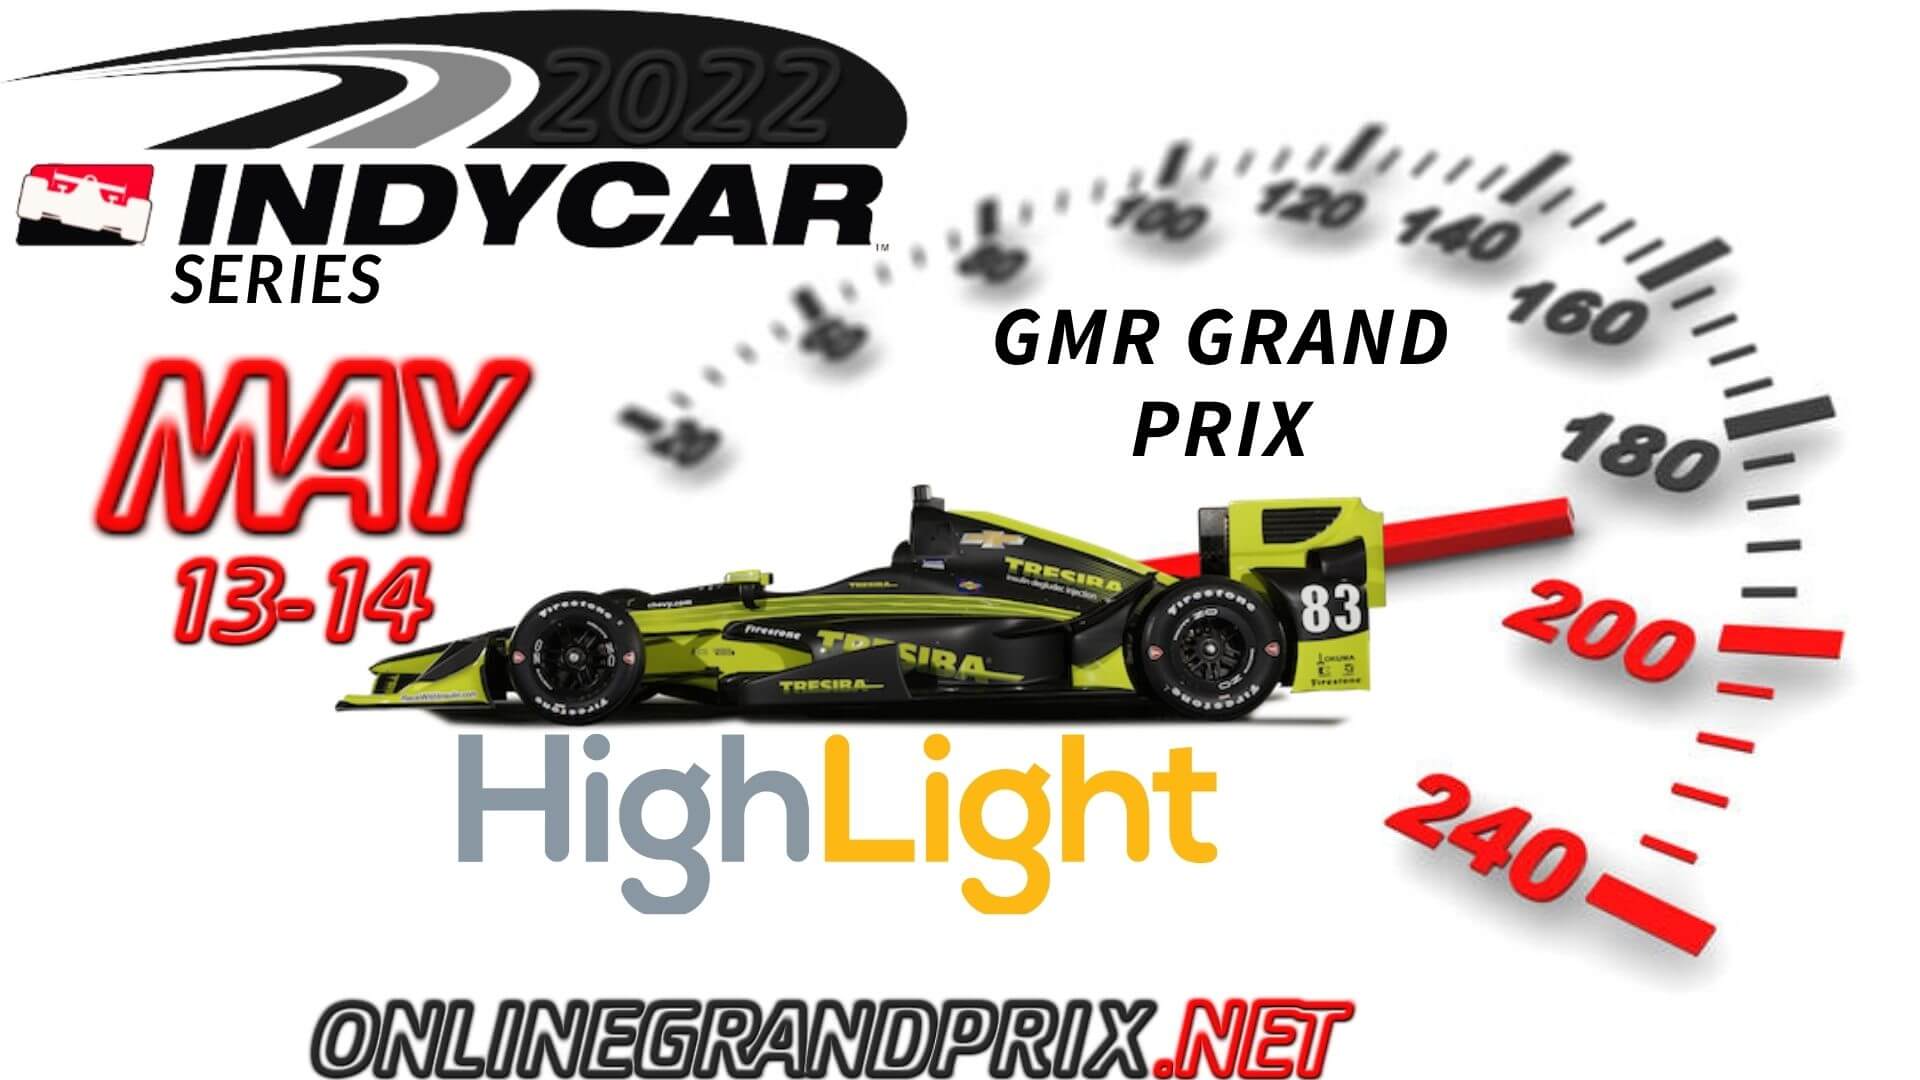 GMR Grand Prix Highlights INDYCAR 2022